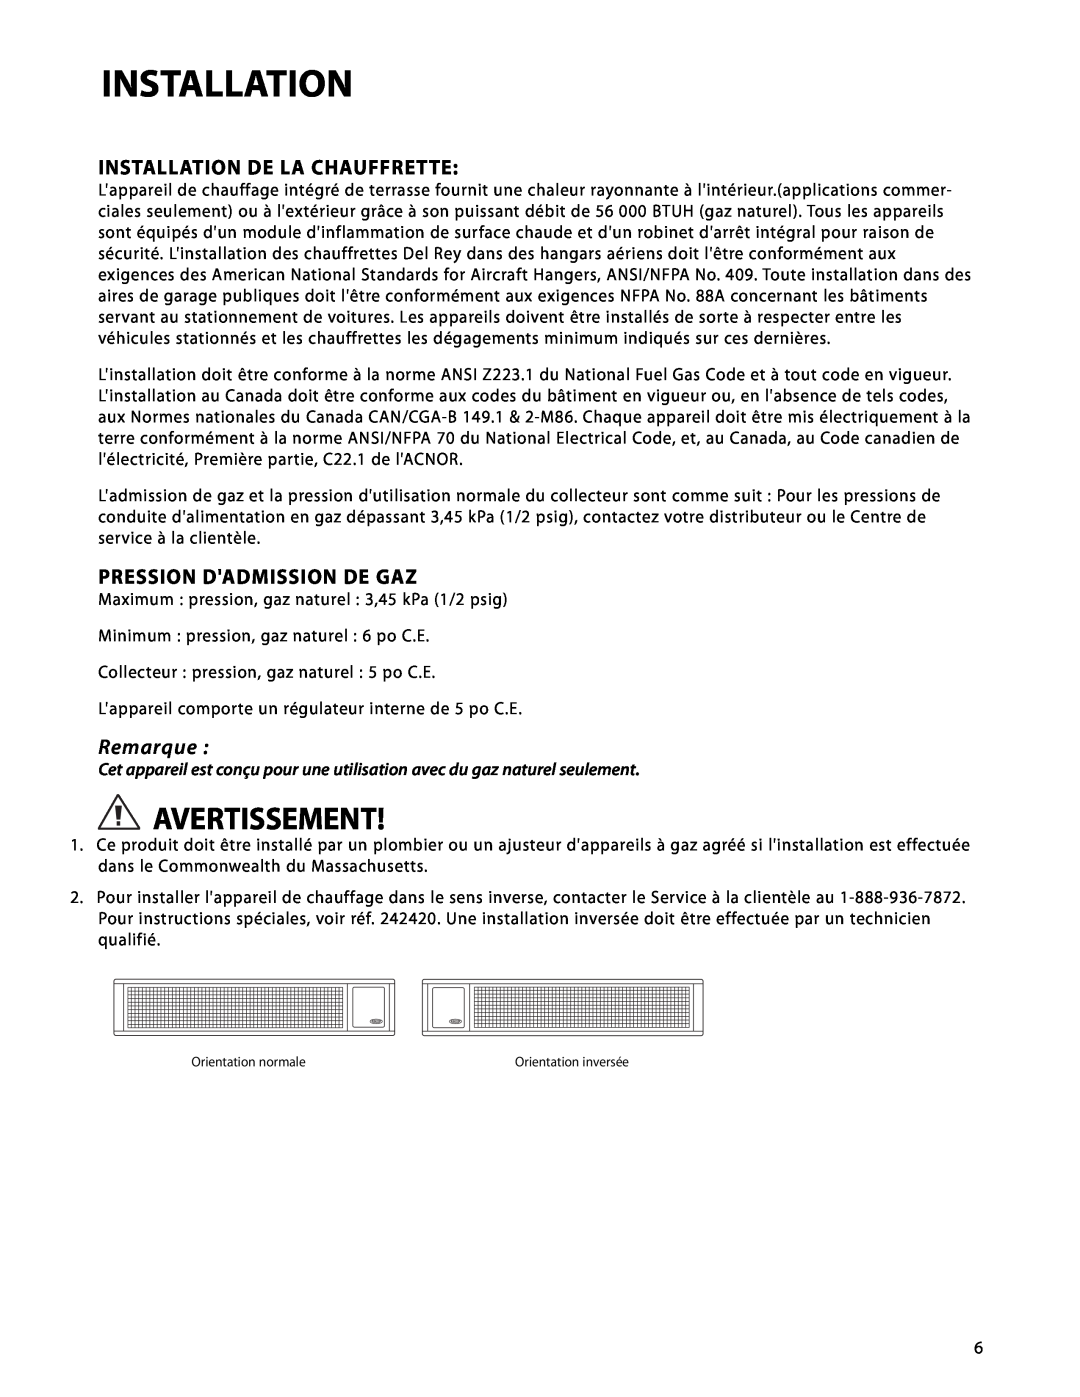 DCS DRH-48N manual Installation De La Chauffrette, Pression Dadmission De Gaz, Avertissement, Remarque 